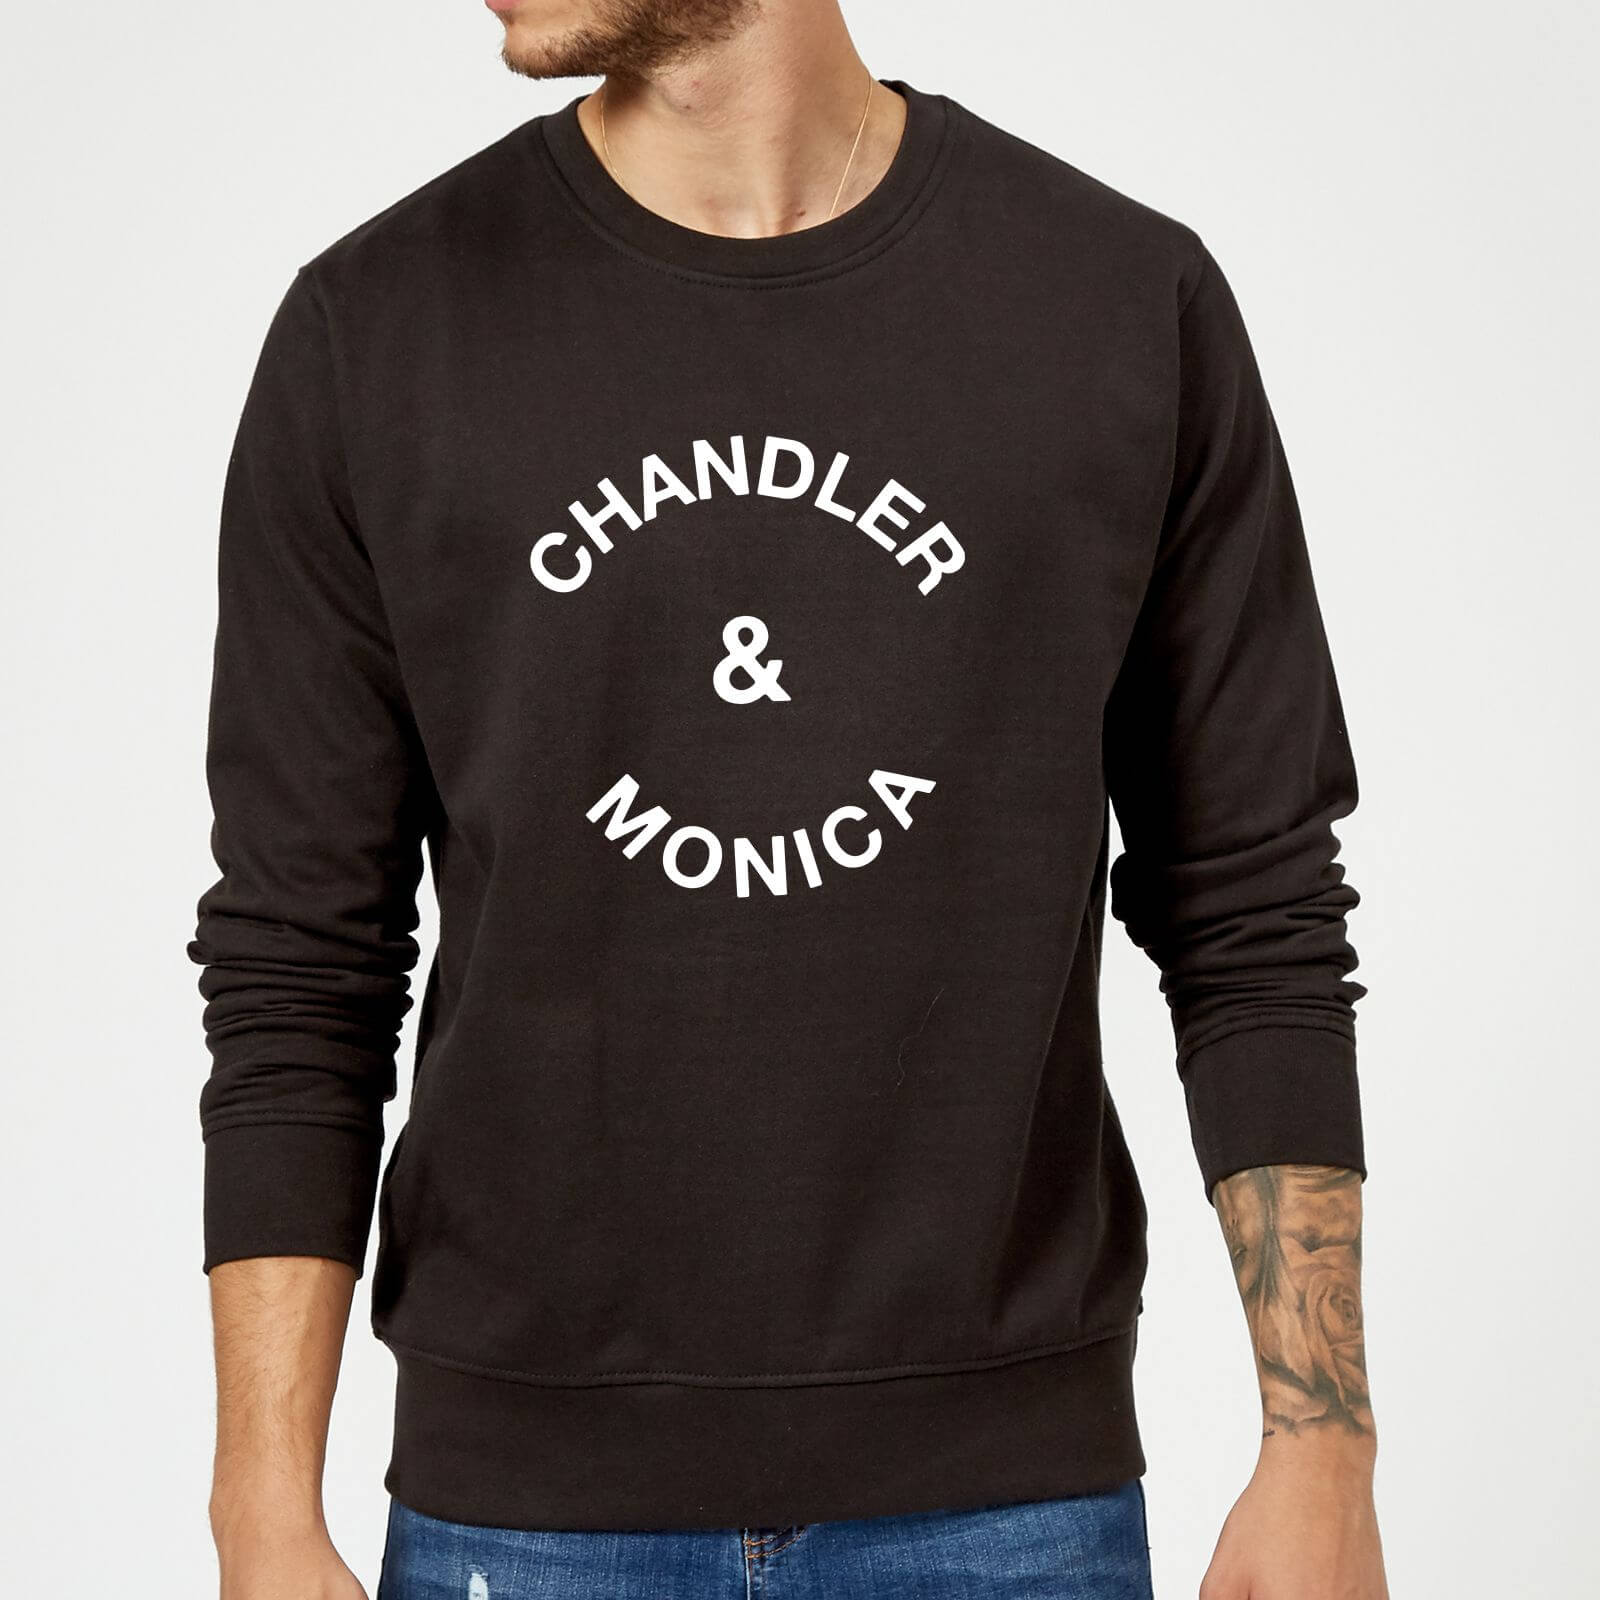 Chandler & Monica Sweatshirt - Black - S - Black